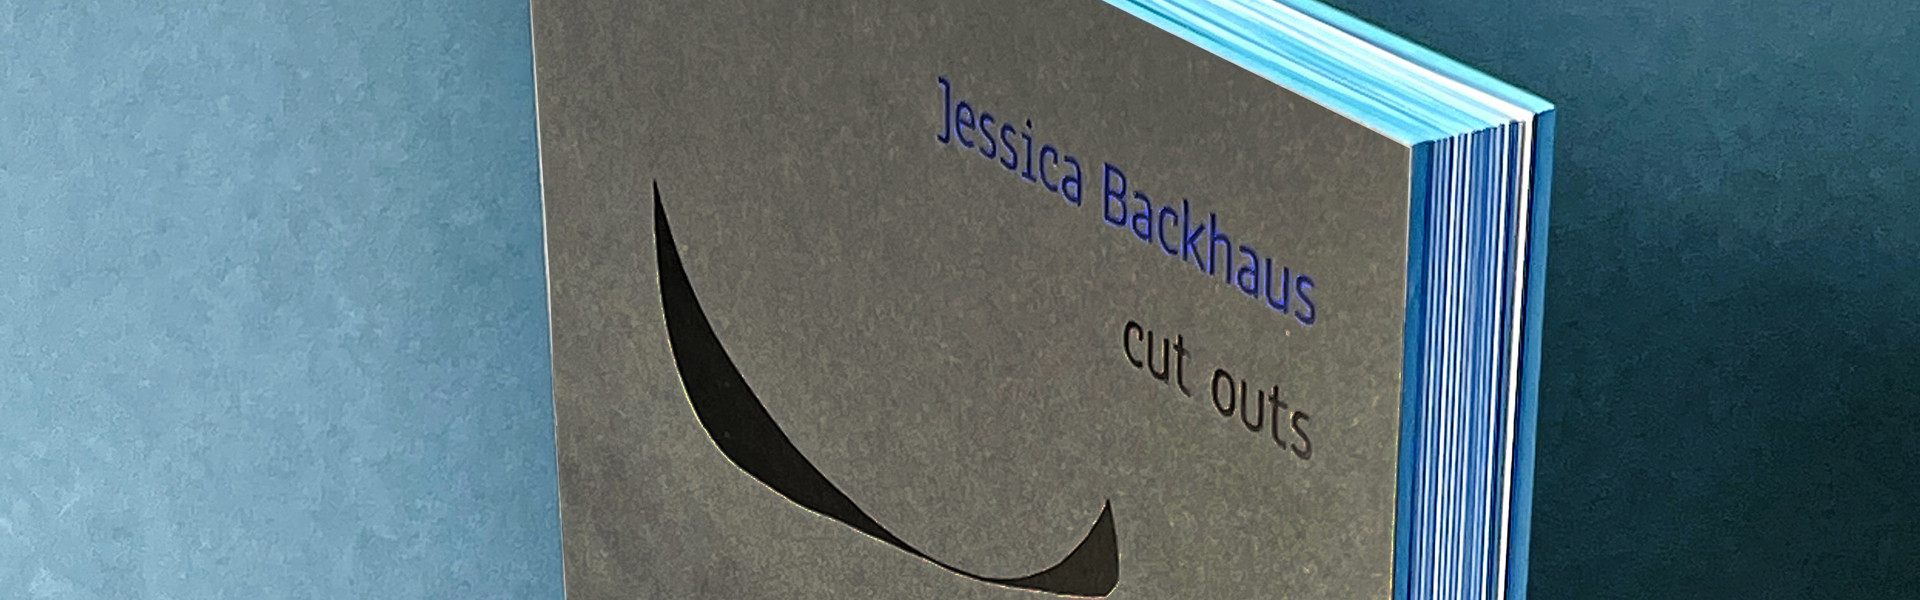 Jessica Backhaus Cut Outs 